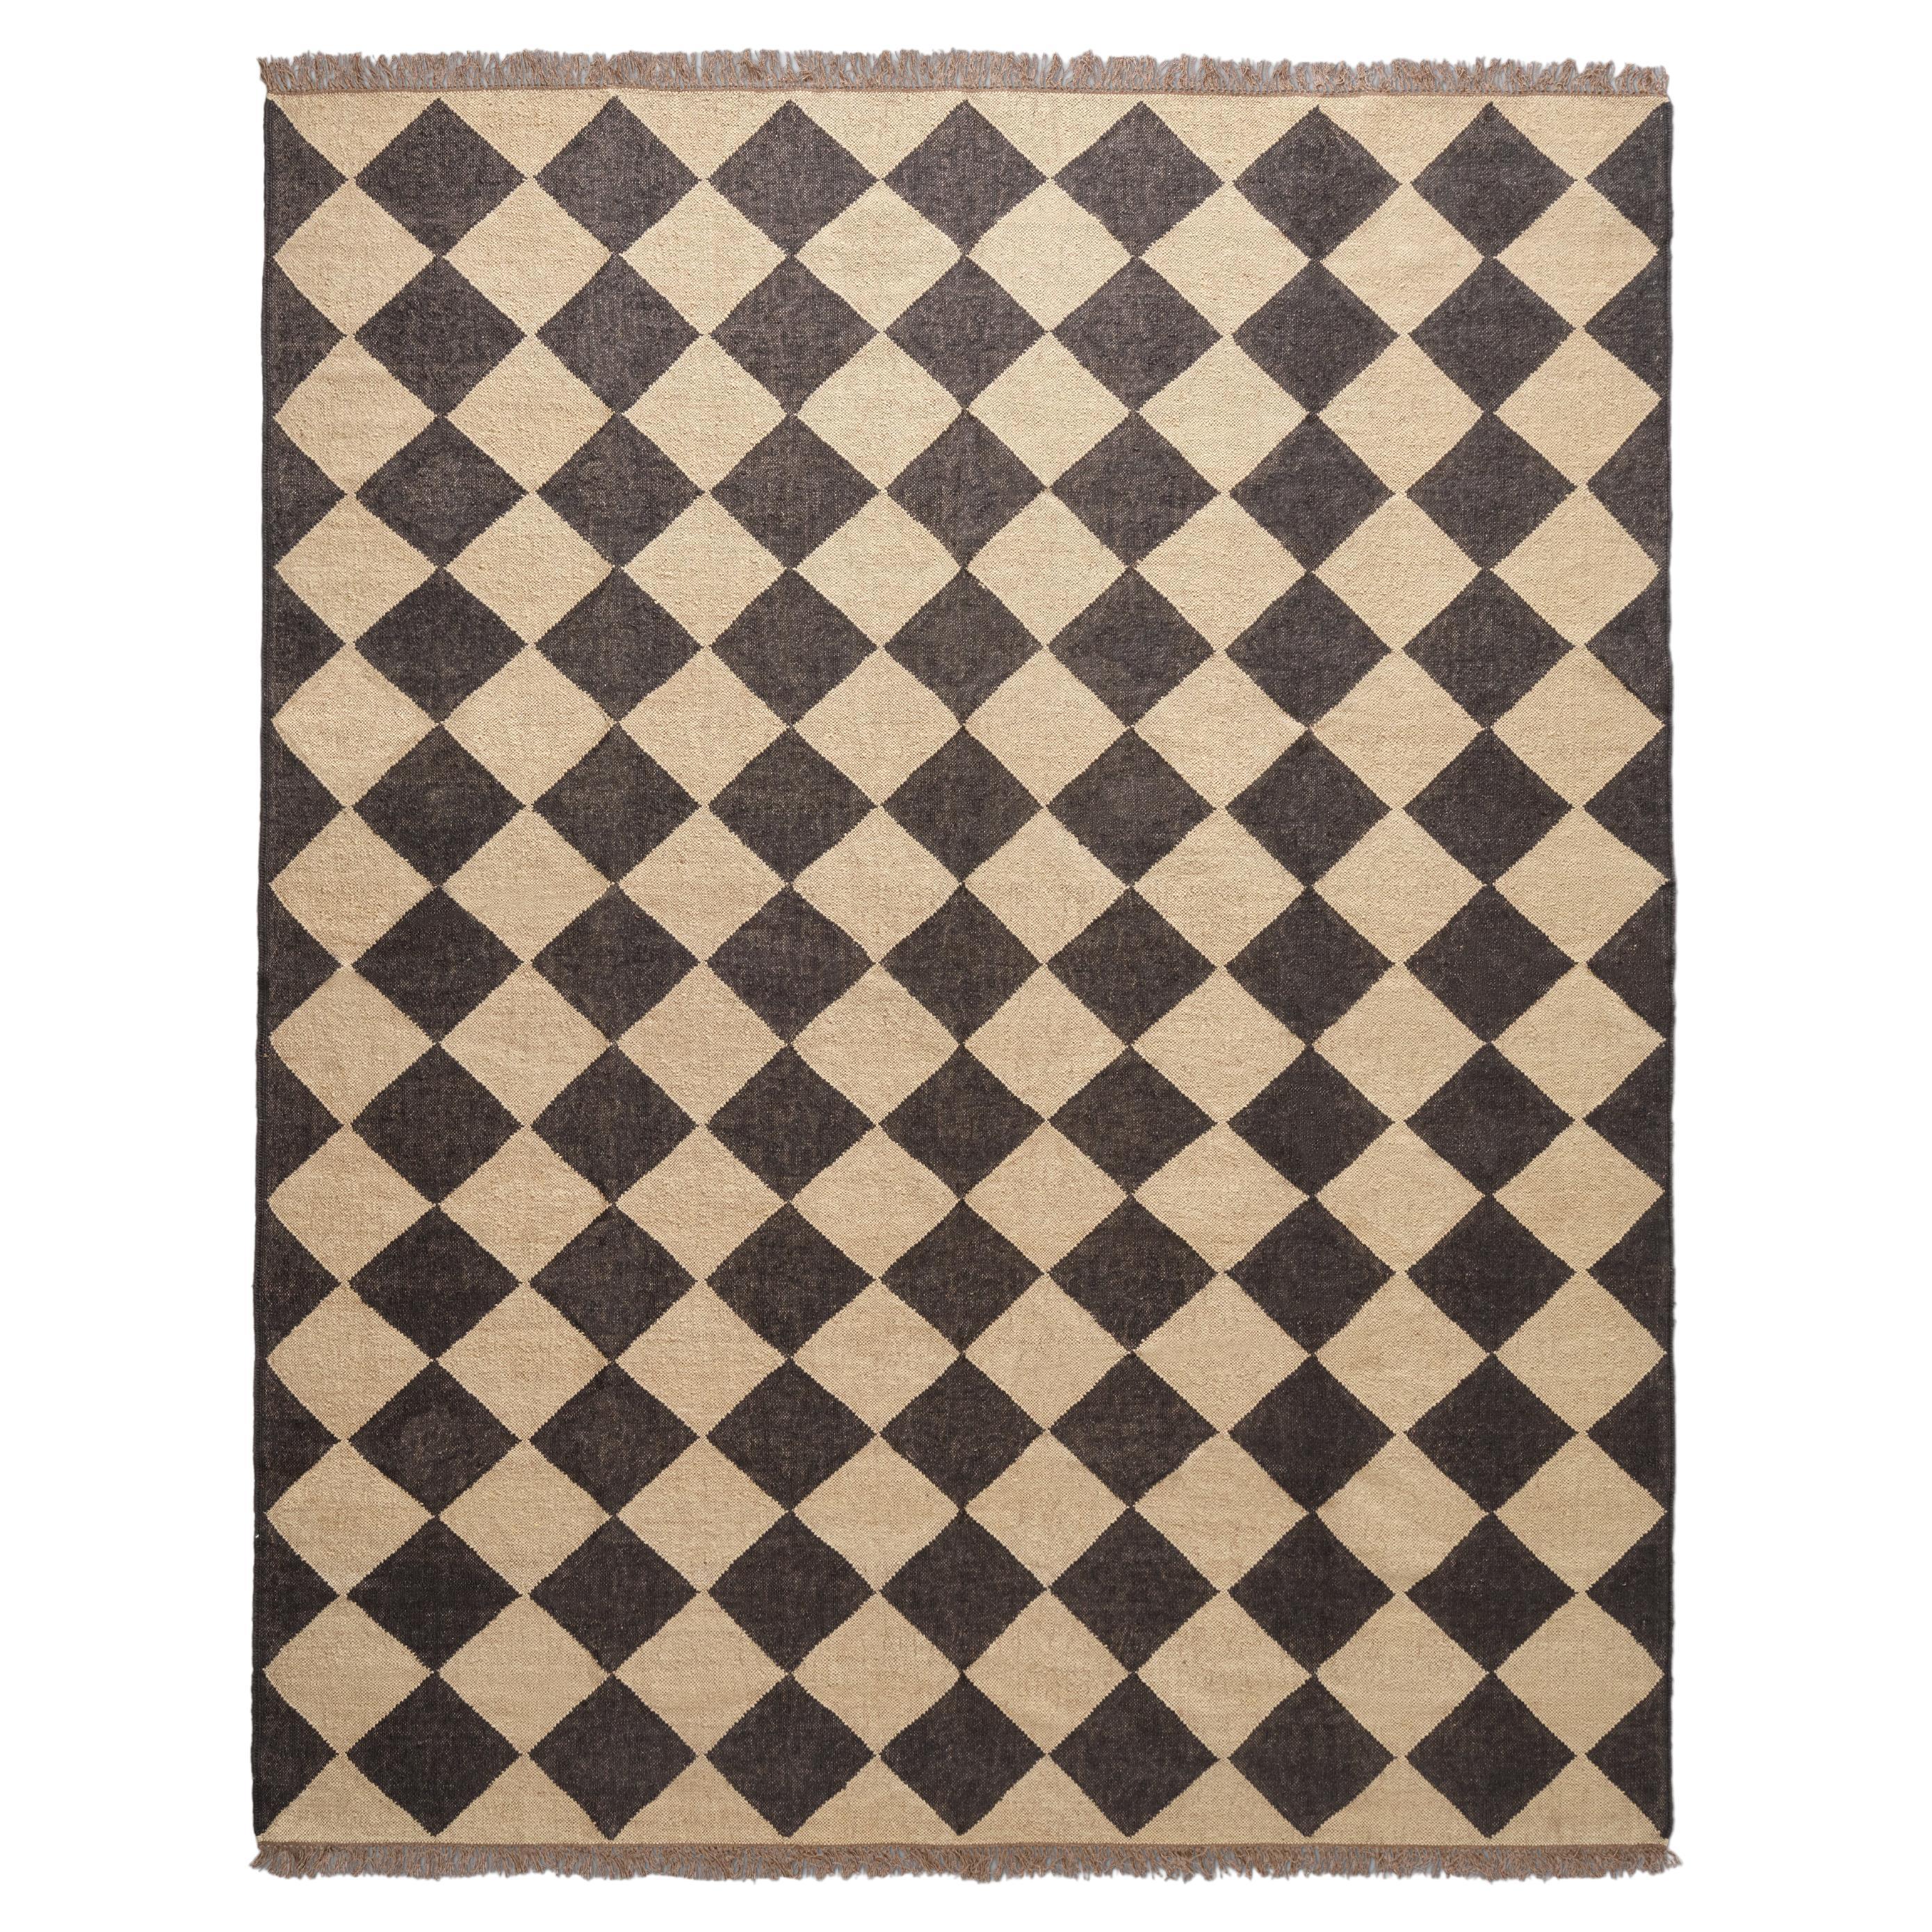 The Forsyth Checkerboard Rug - Diamond Check in Off Black, 8x10